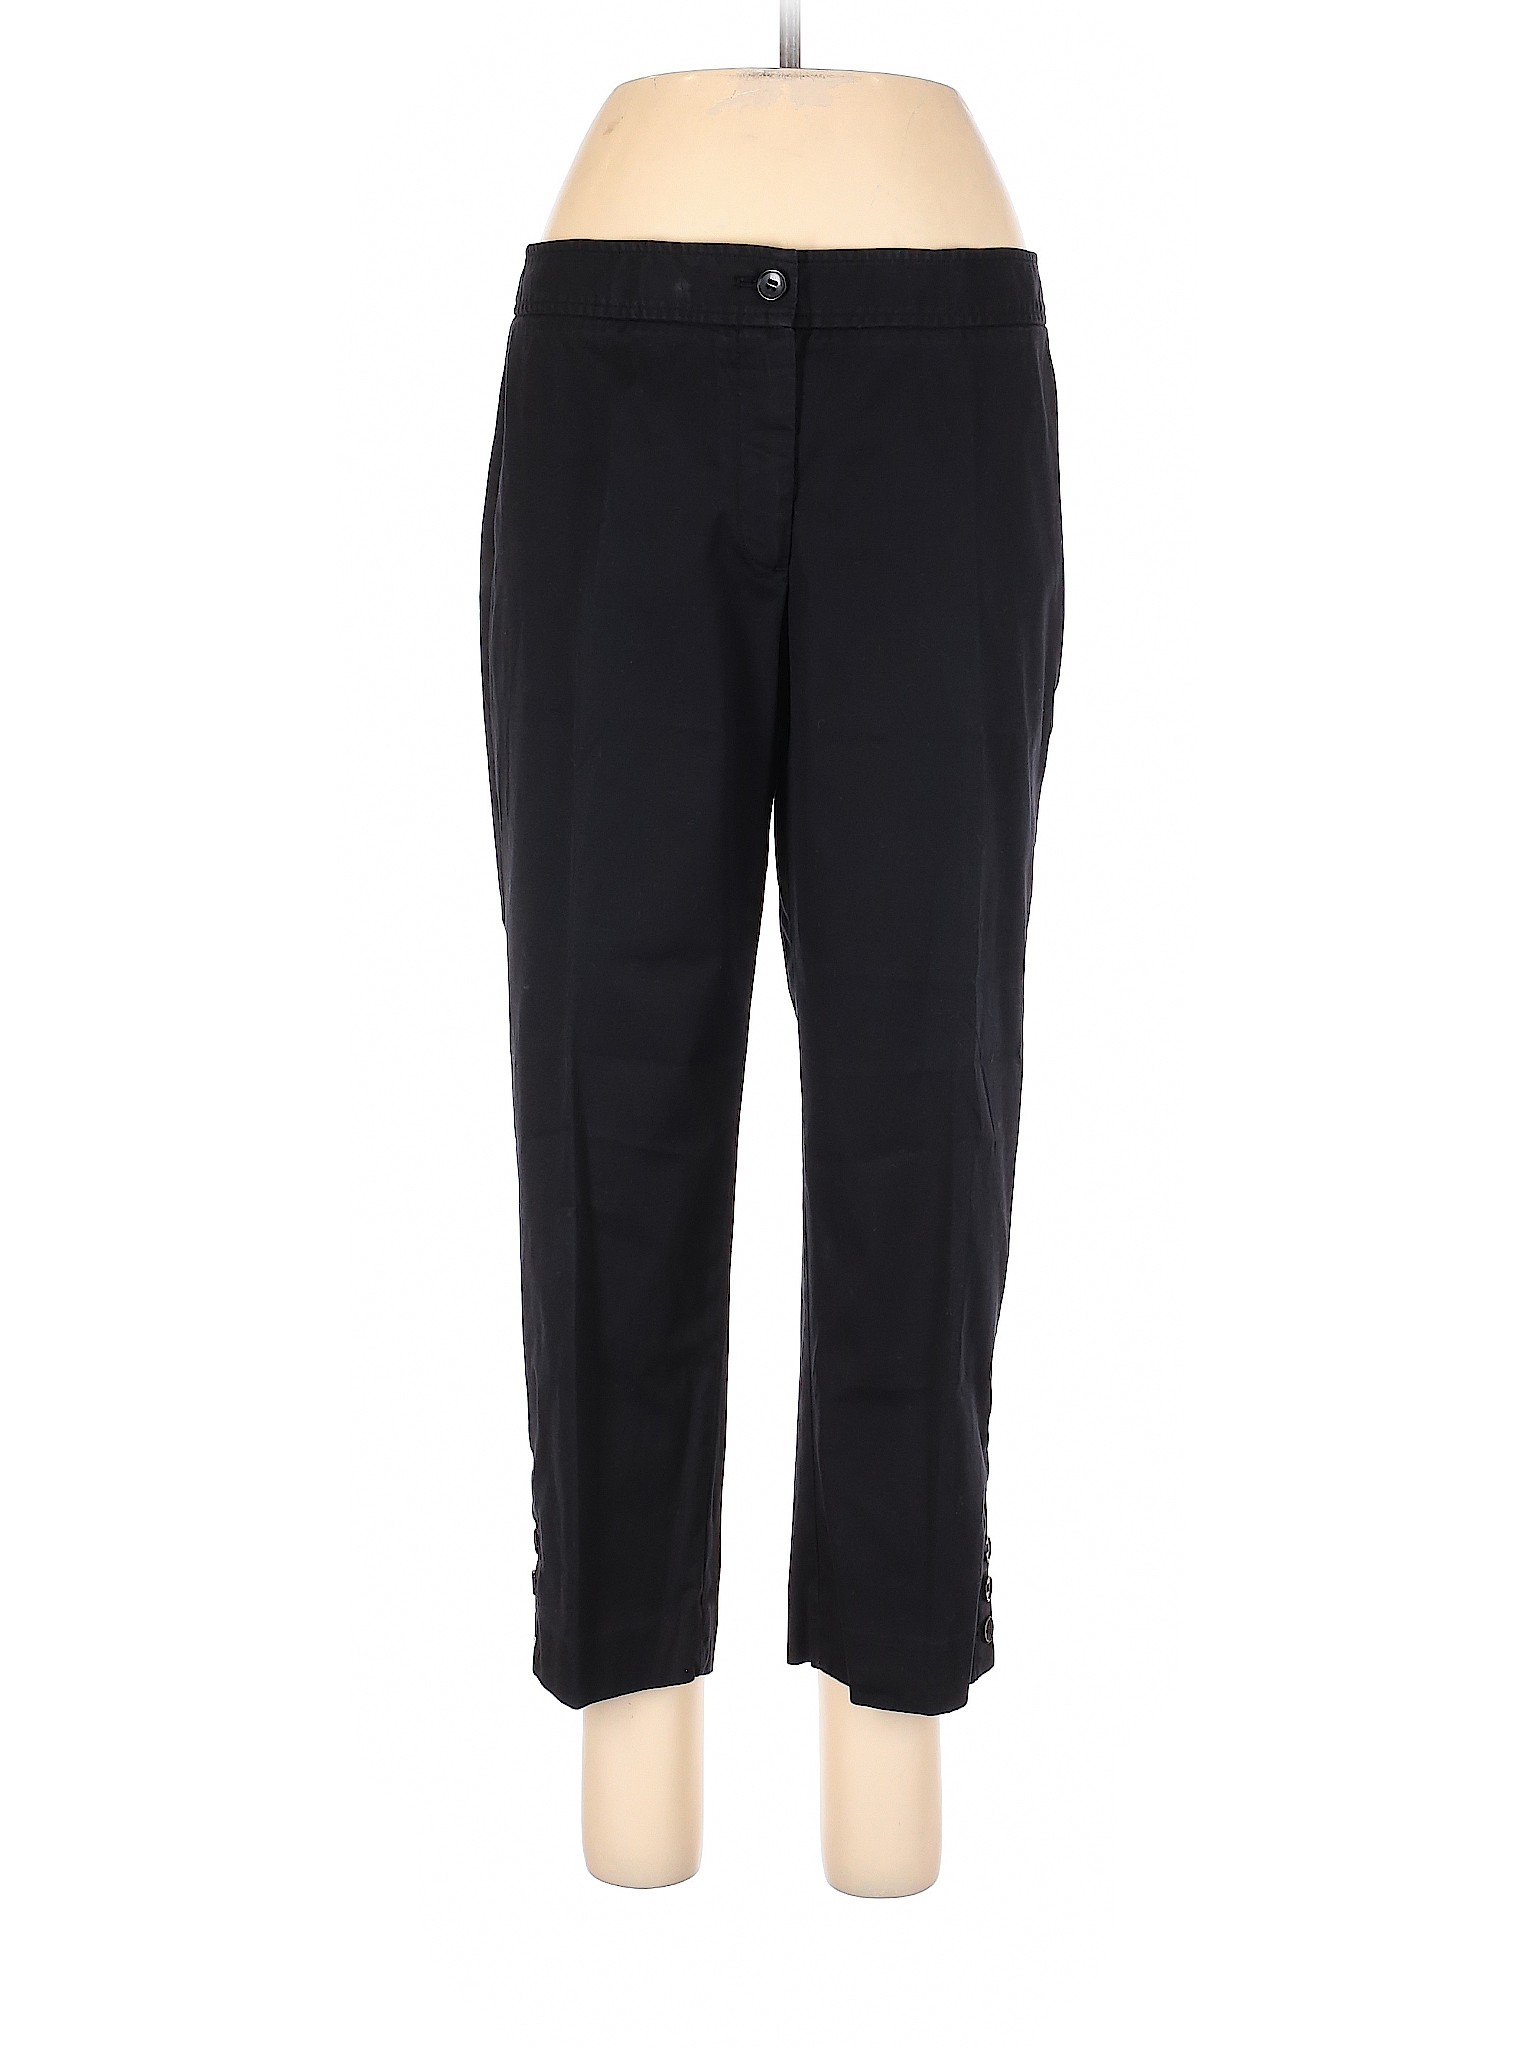 Talbots Women Black Casual Pants 10 | eBay